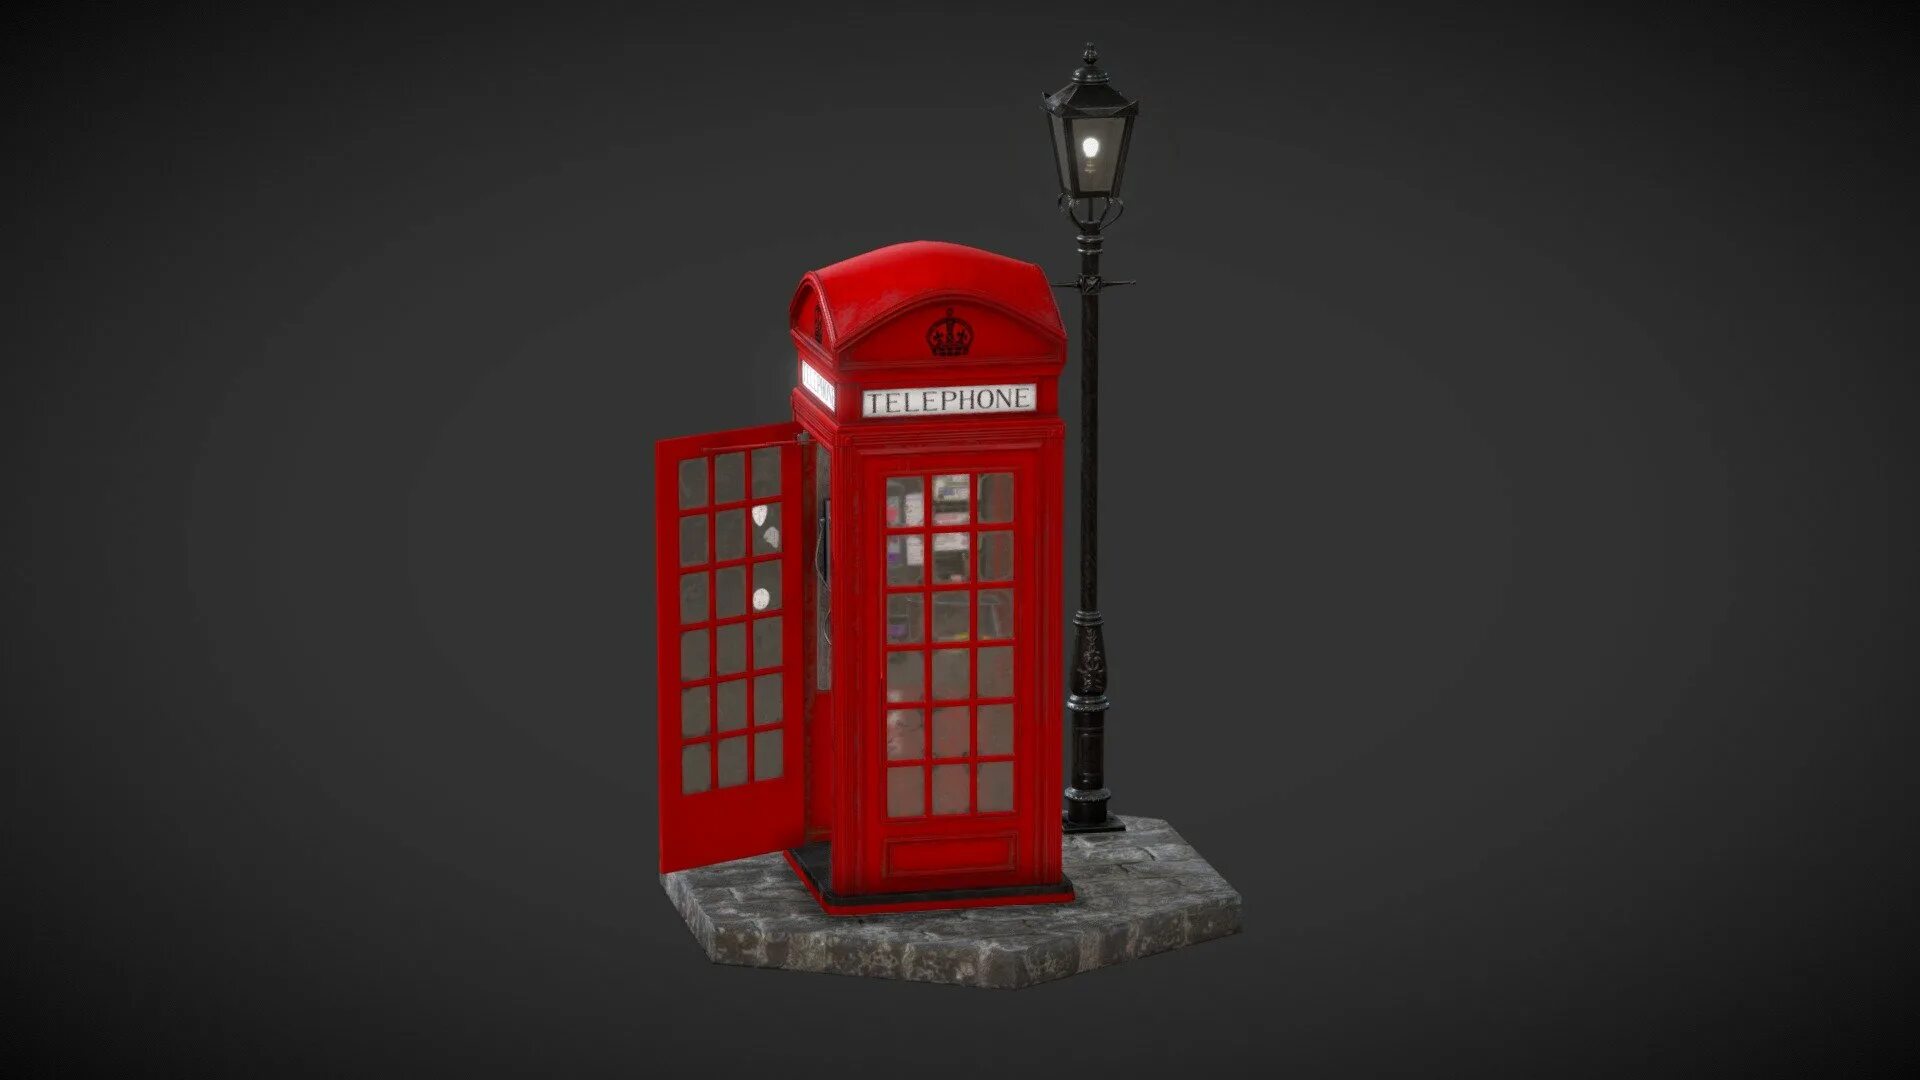 Red Phone Booth London. Модель: Red telephone Box. Лондон телефонный будка 3d model. Phone both